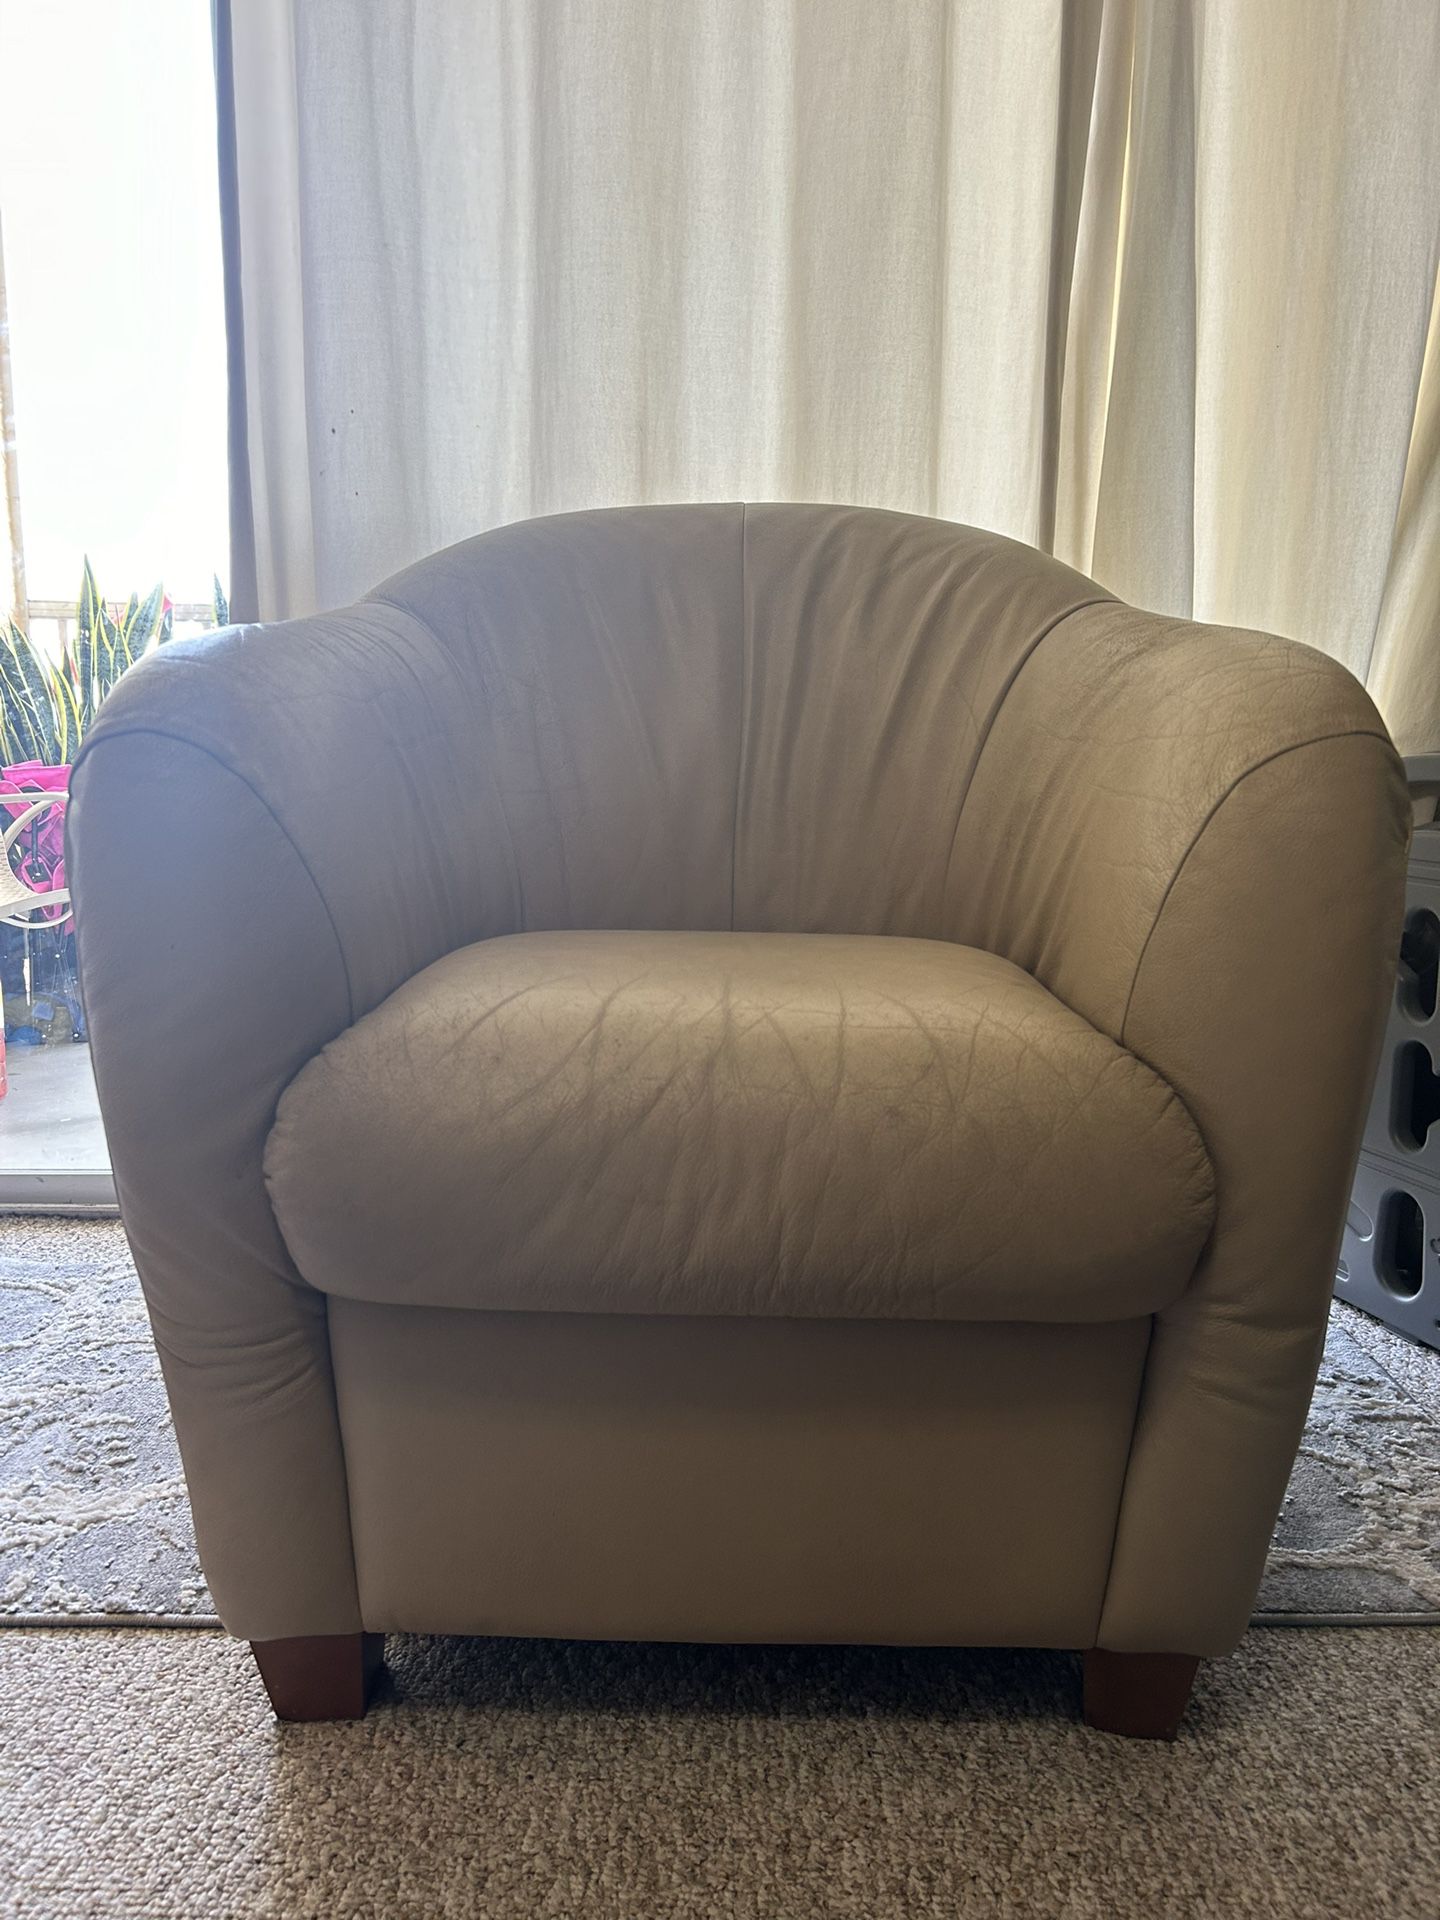 Italsofa Tan Leather Chair